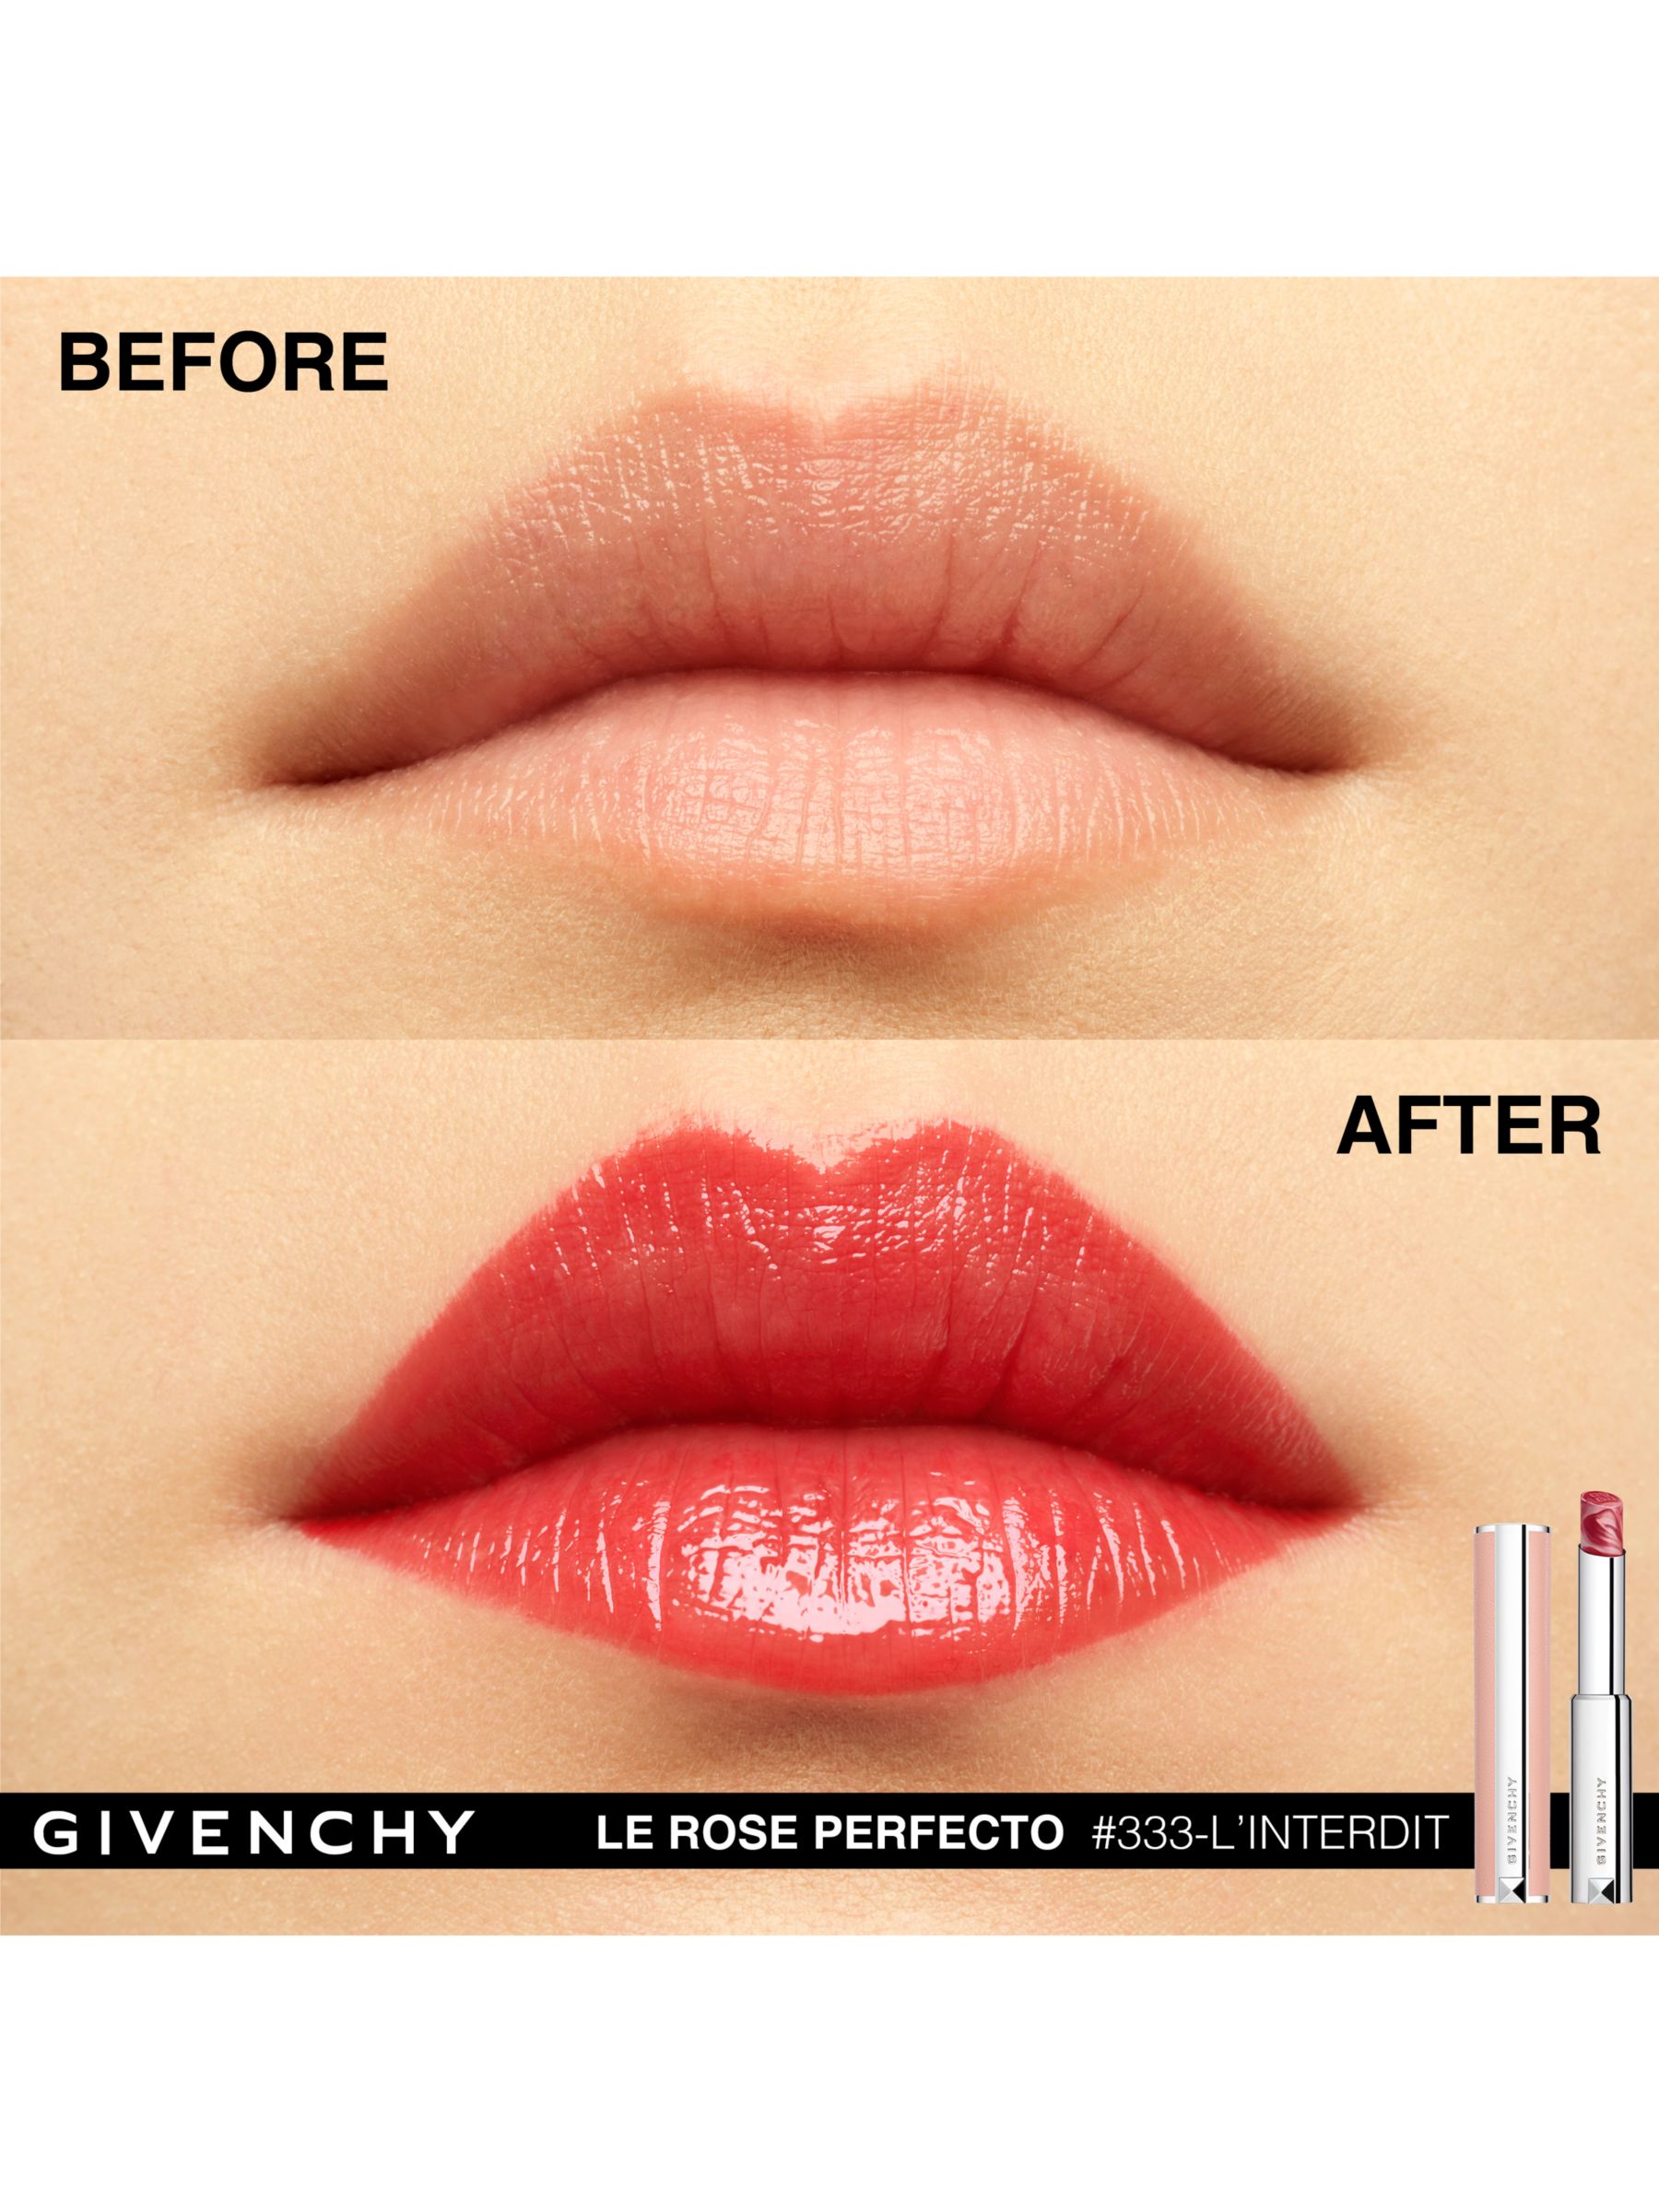 Givenchy Rose Perfecto Beautifying Lip Balm, N333 L'Interdit 4